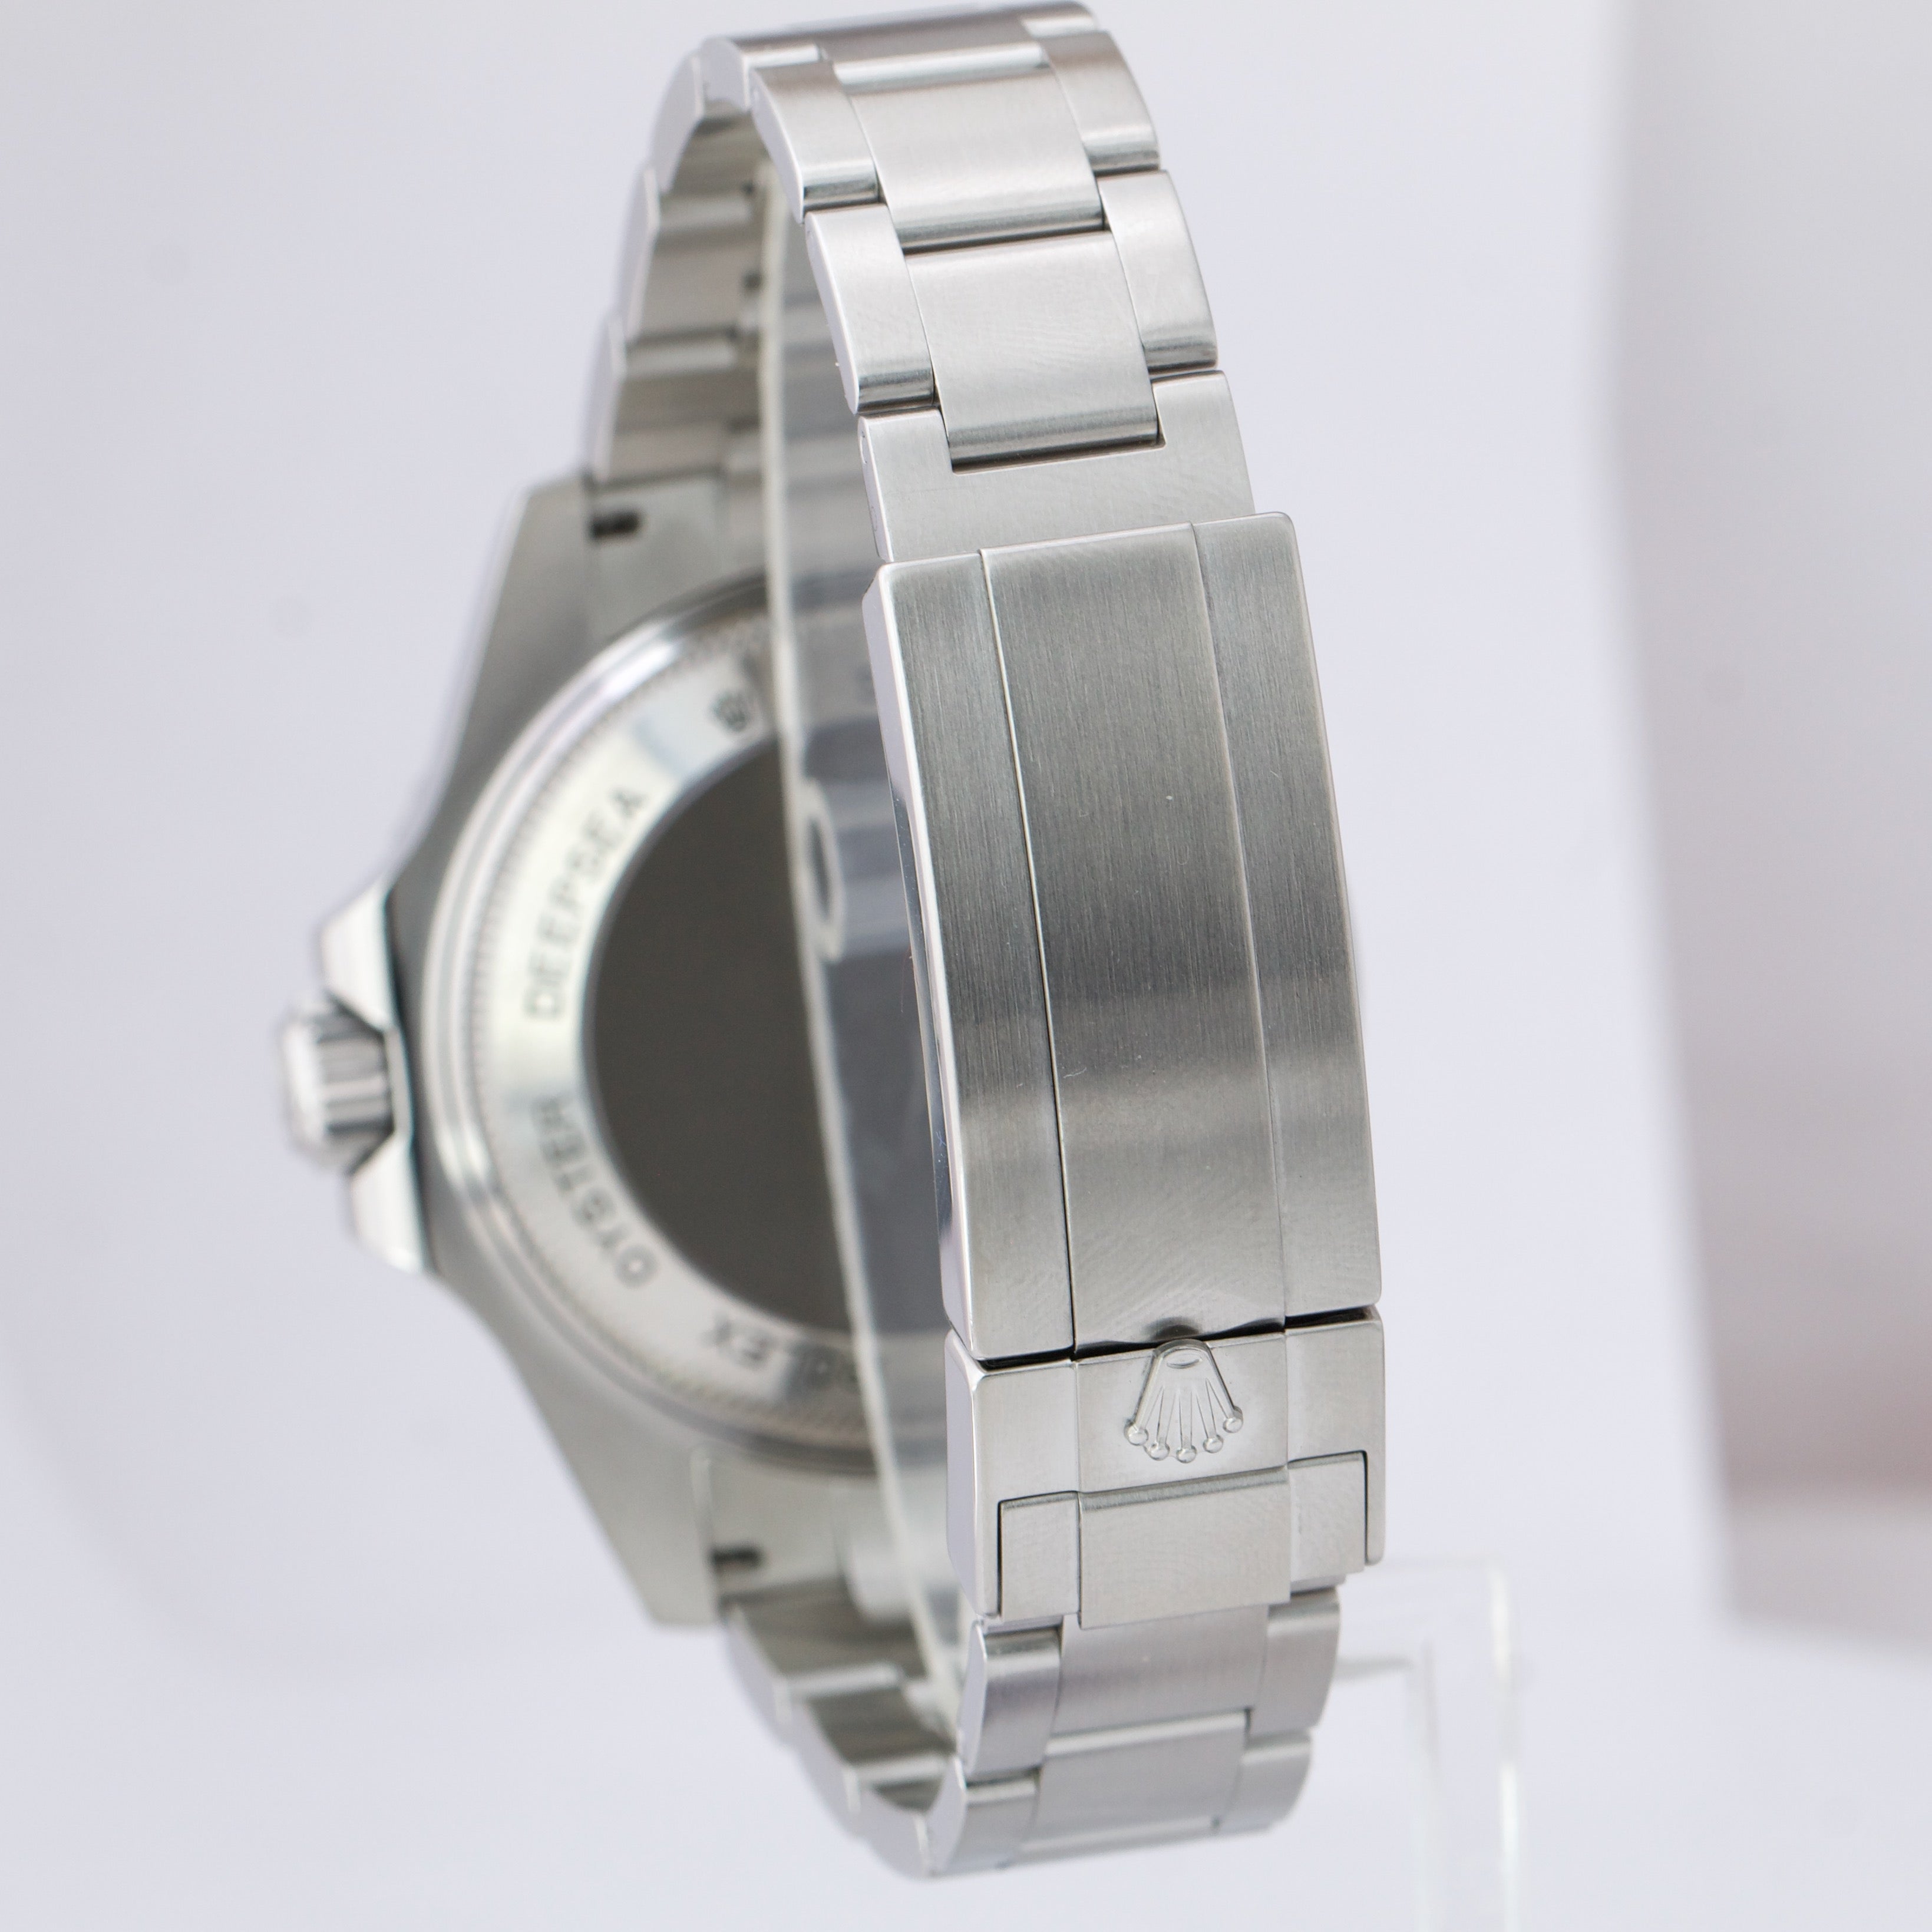 SERVICE CARD RSC Rolex Sea-Dweller Deepsea 116660 Steel 44mm Black Dive Watch